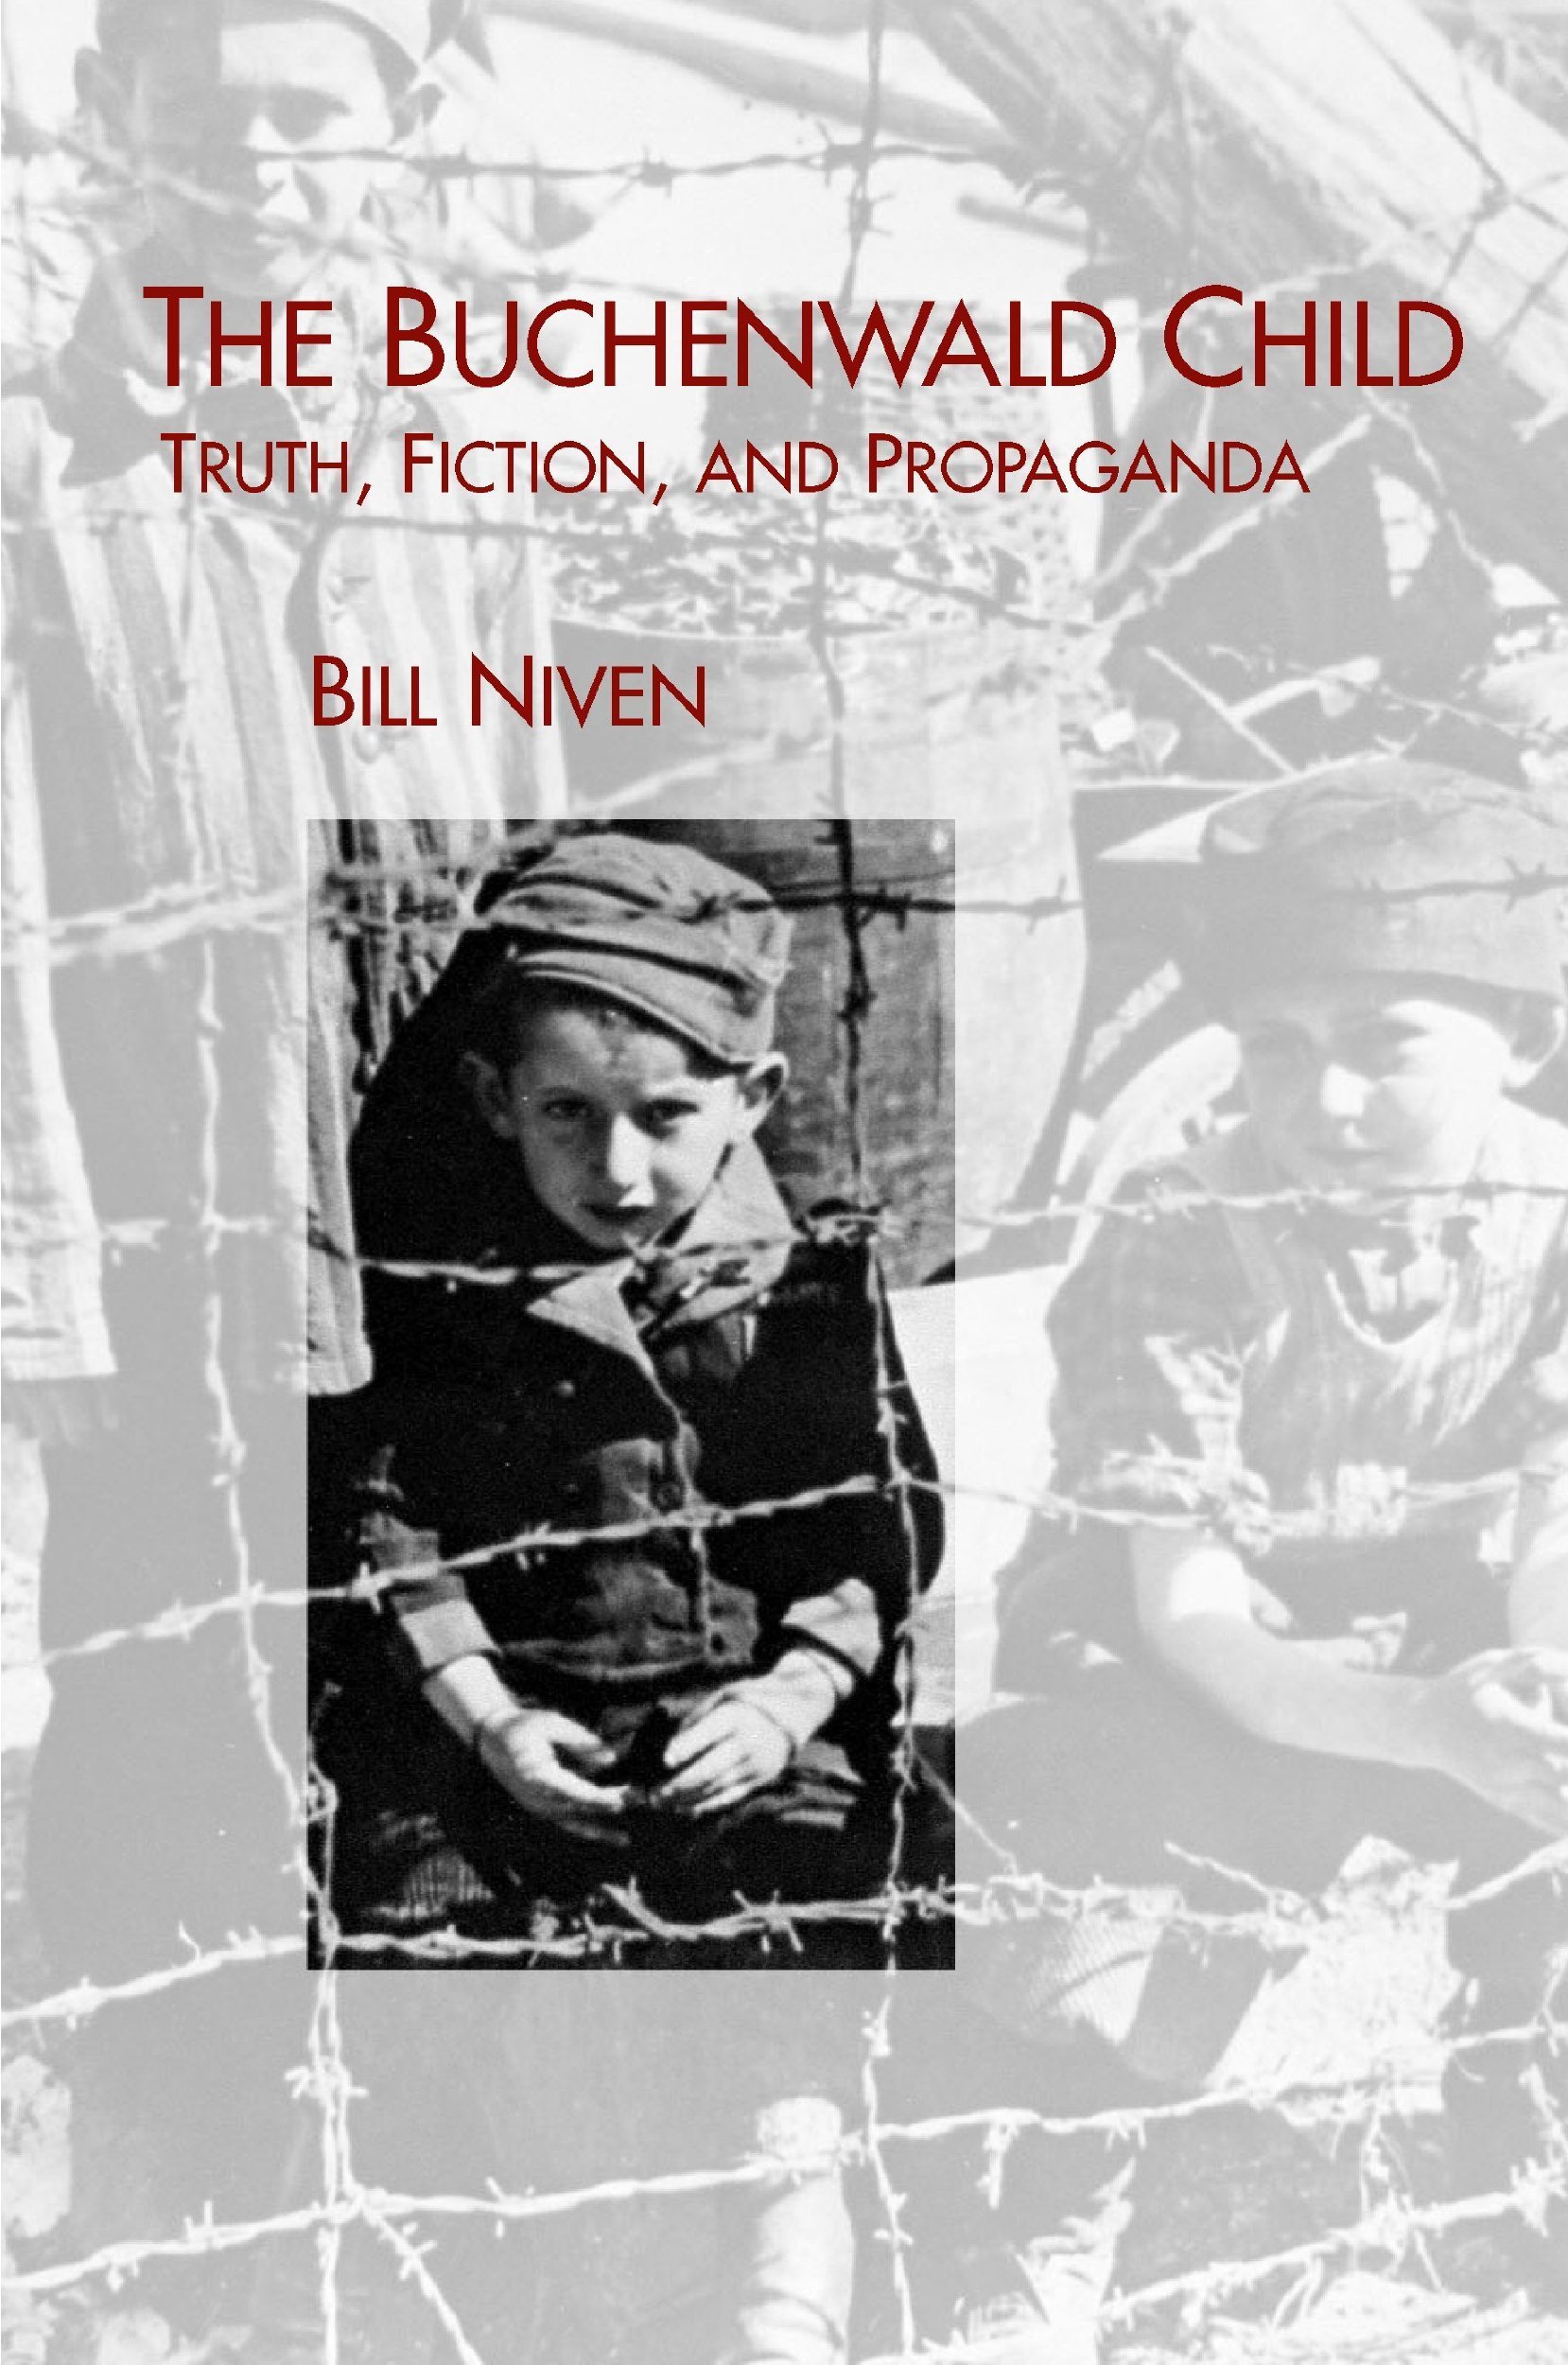 The Buchenwald Child: Truth, Fiction, and Propaganda